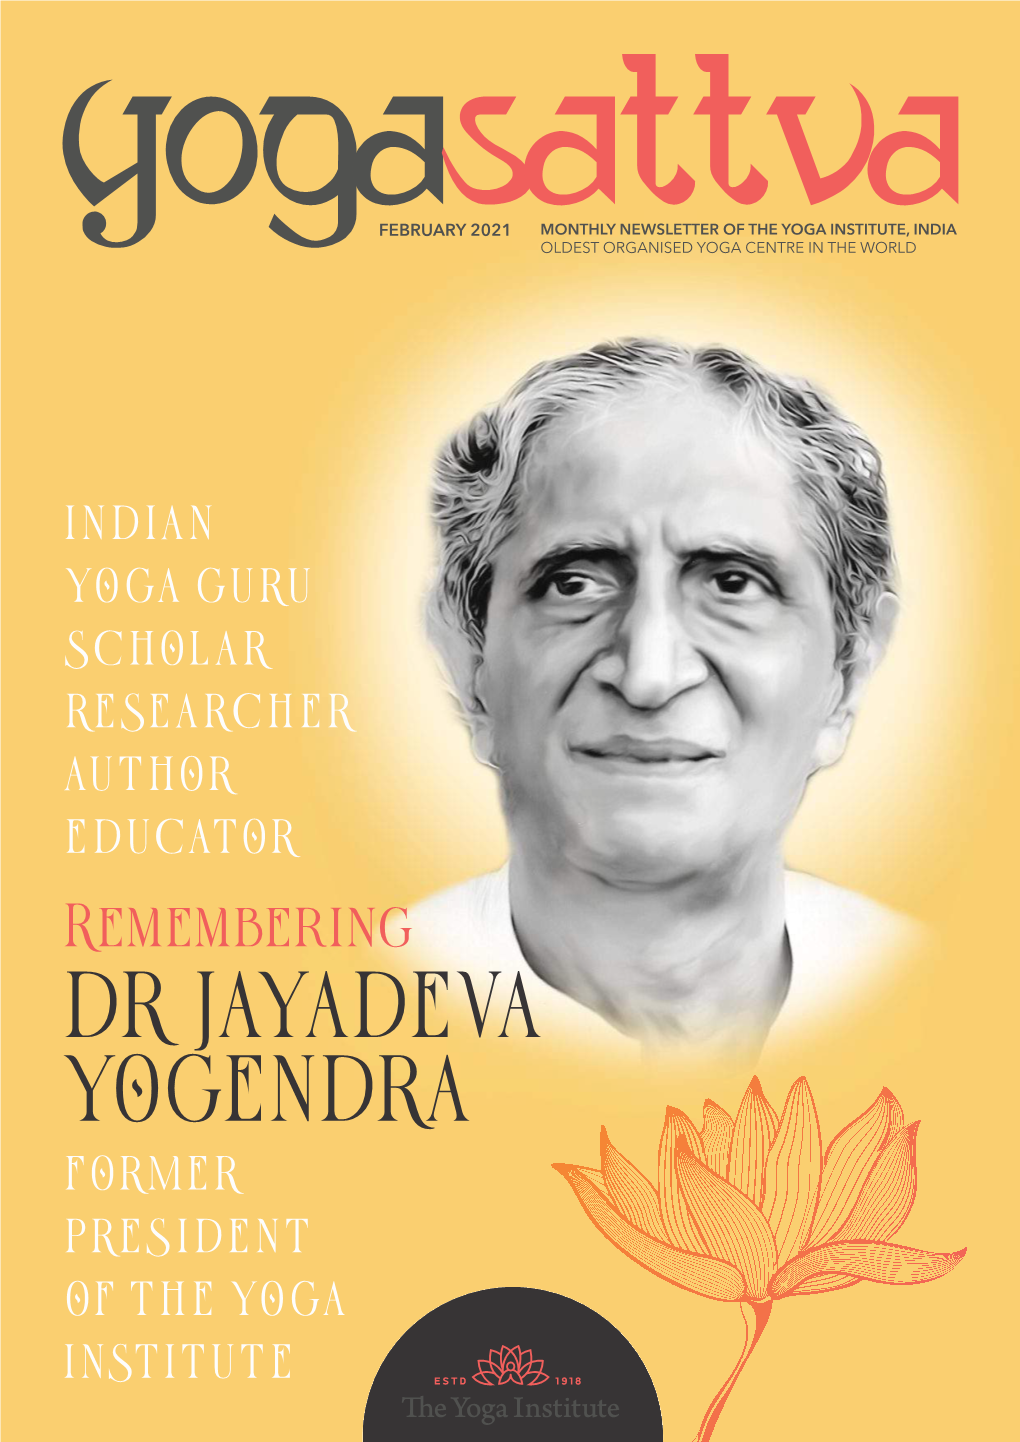 Dr Jayadeva Yogendra